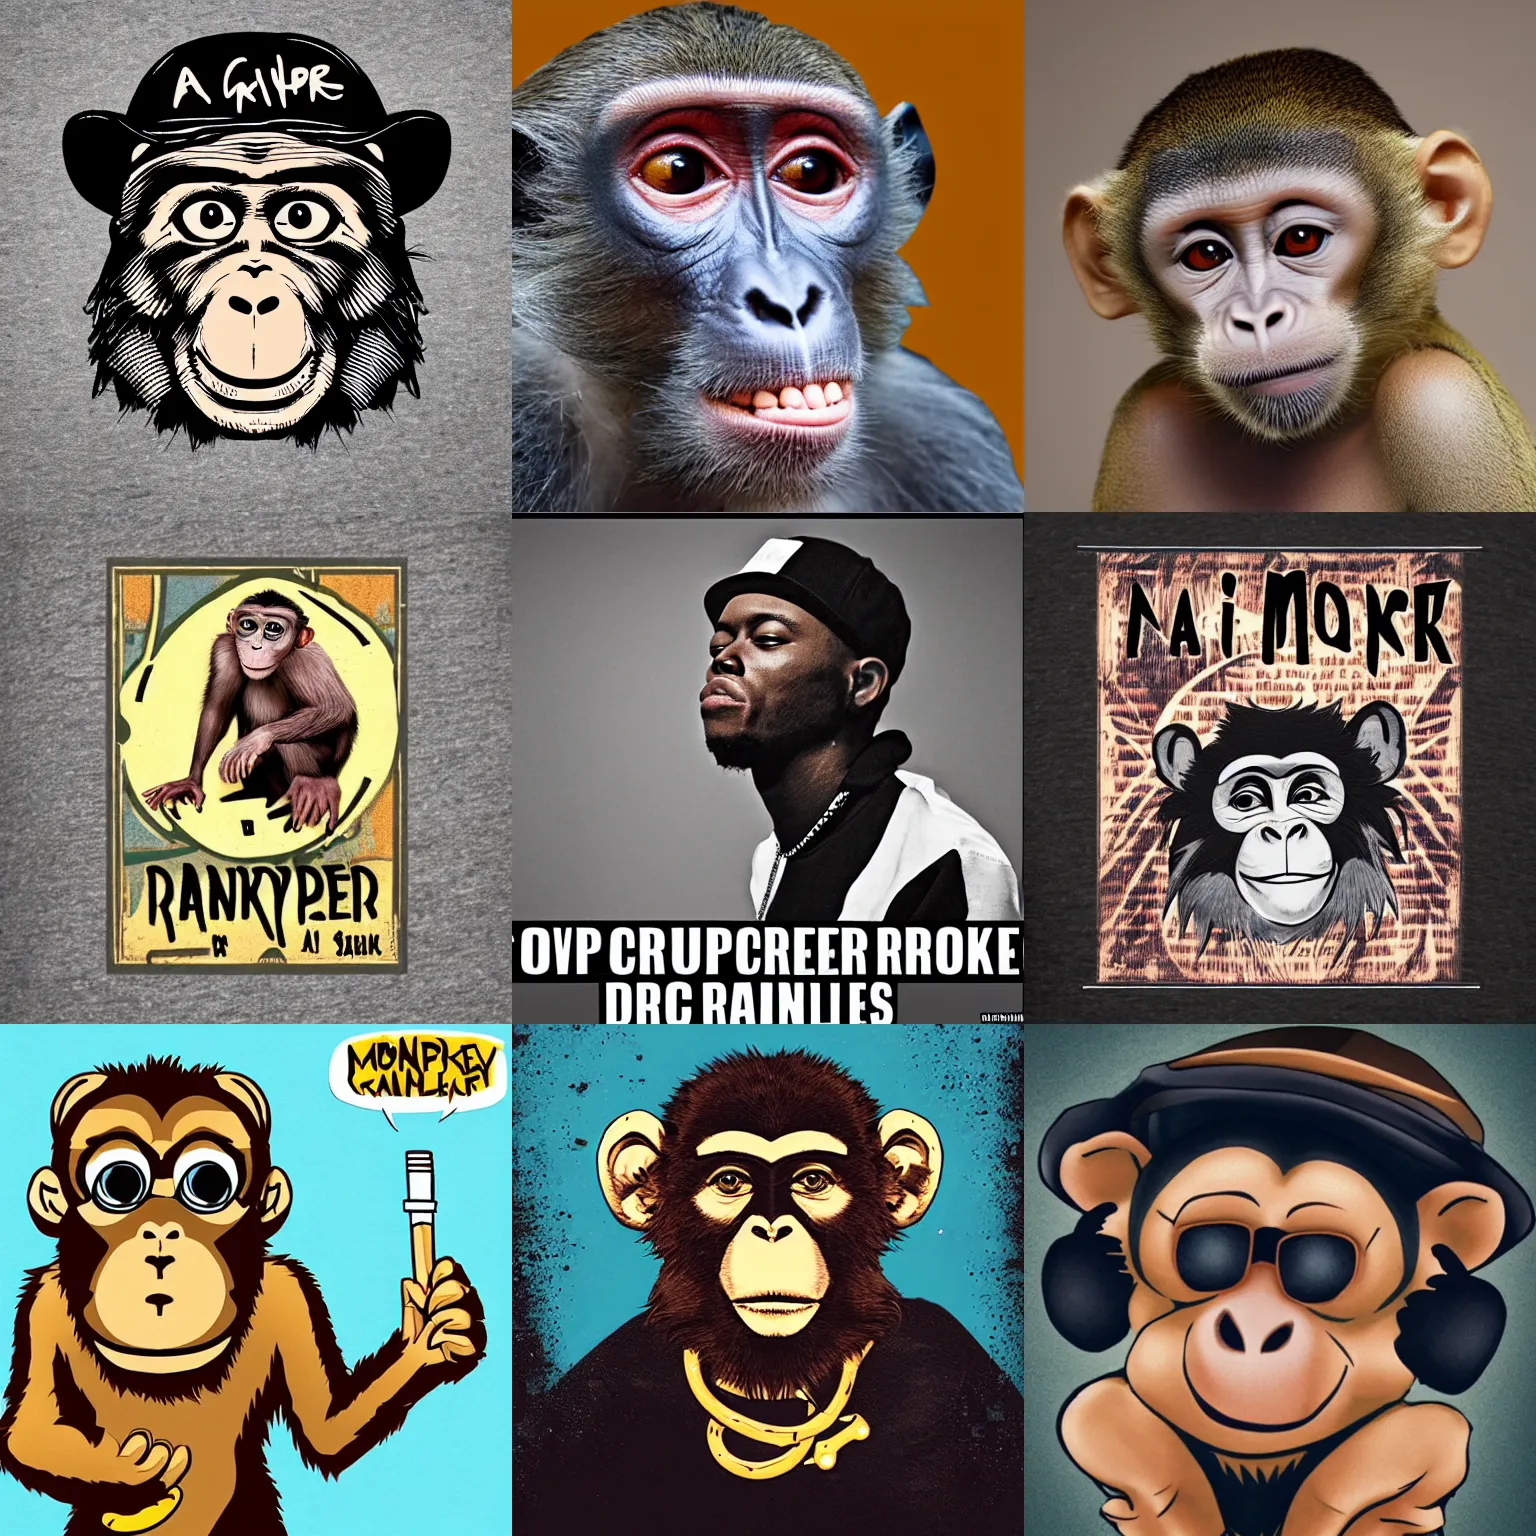 Prompt: a rapper monkey